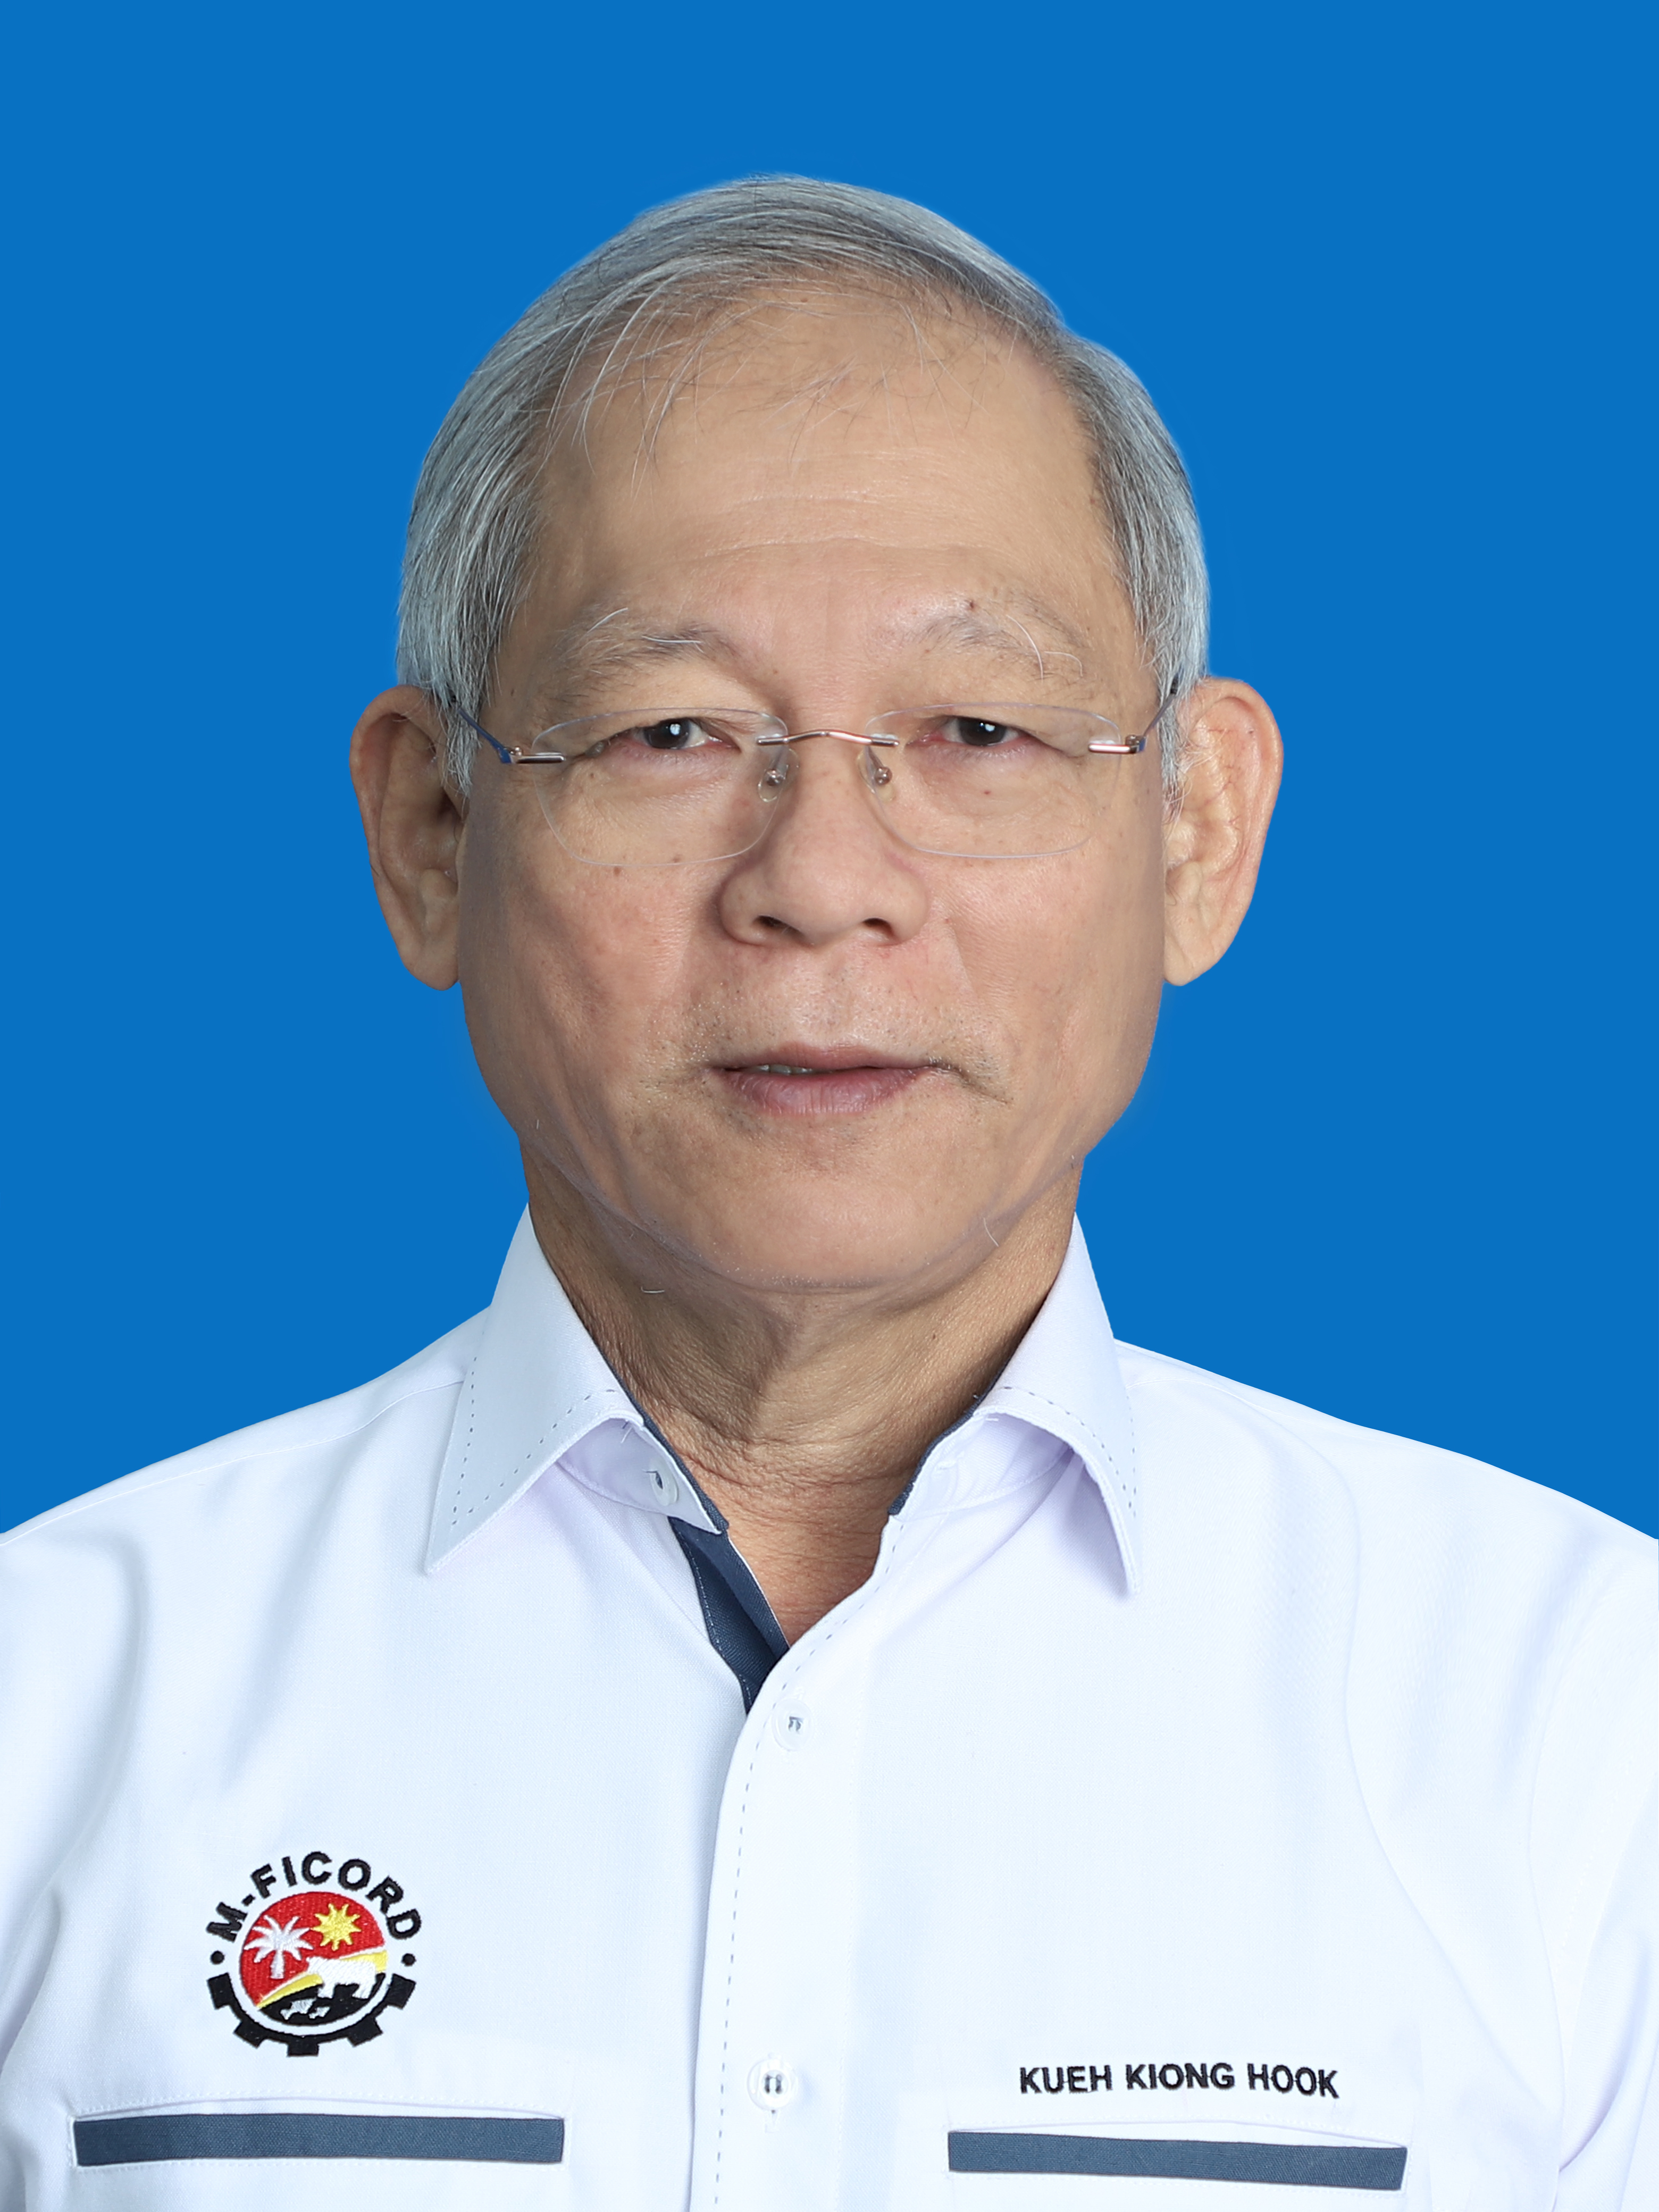 Dr. Kueh Kiong Hook